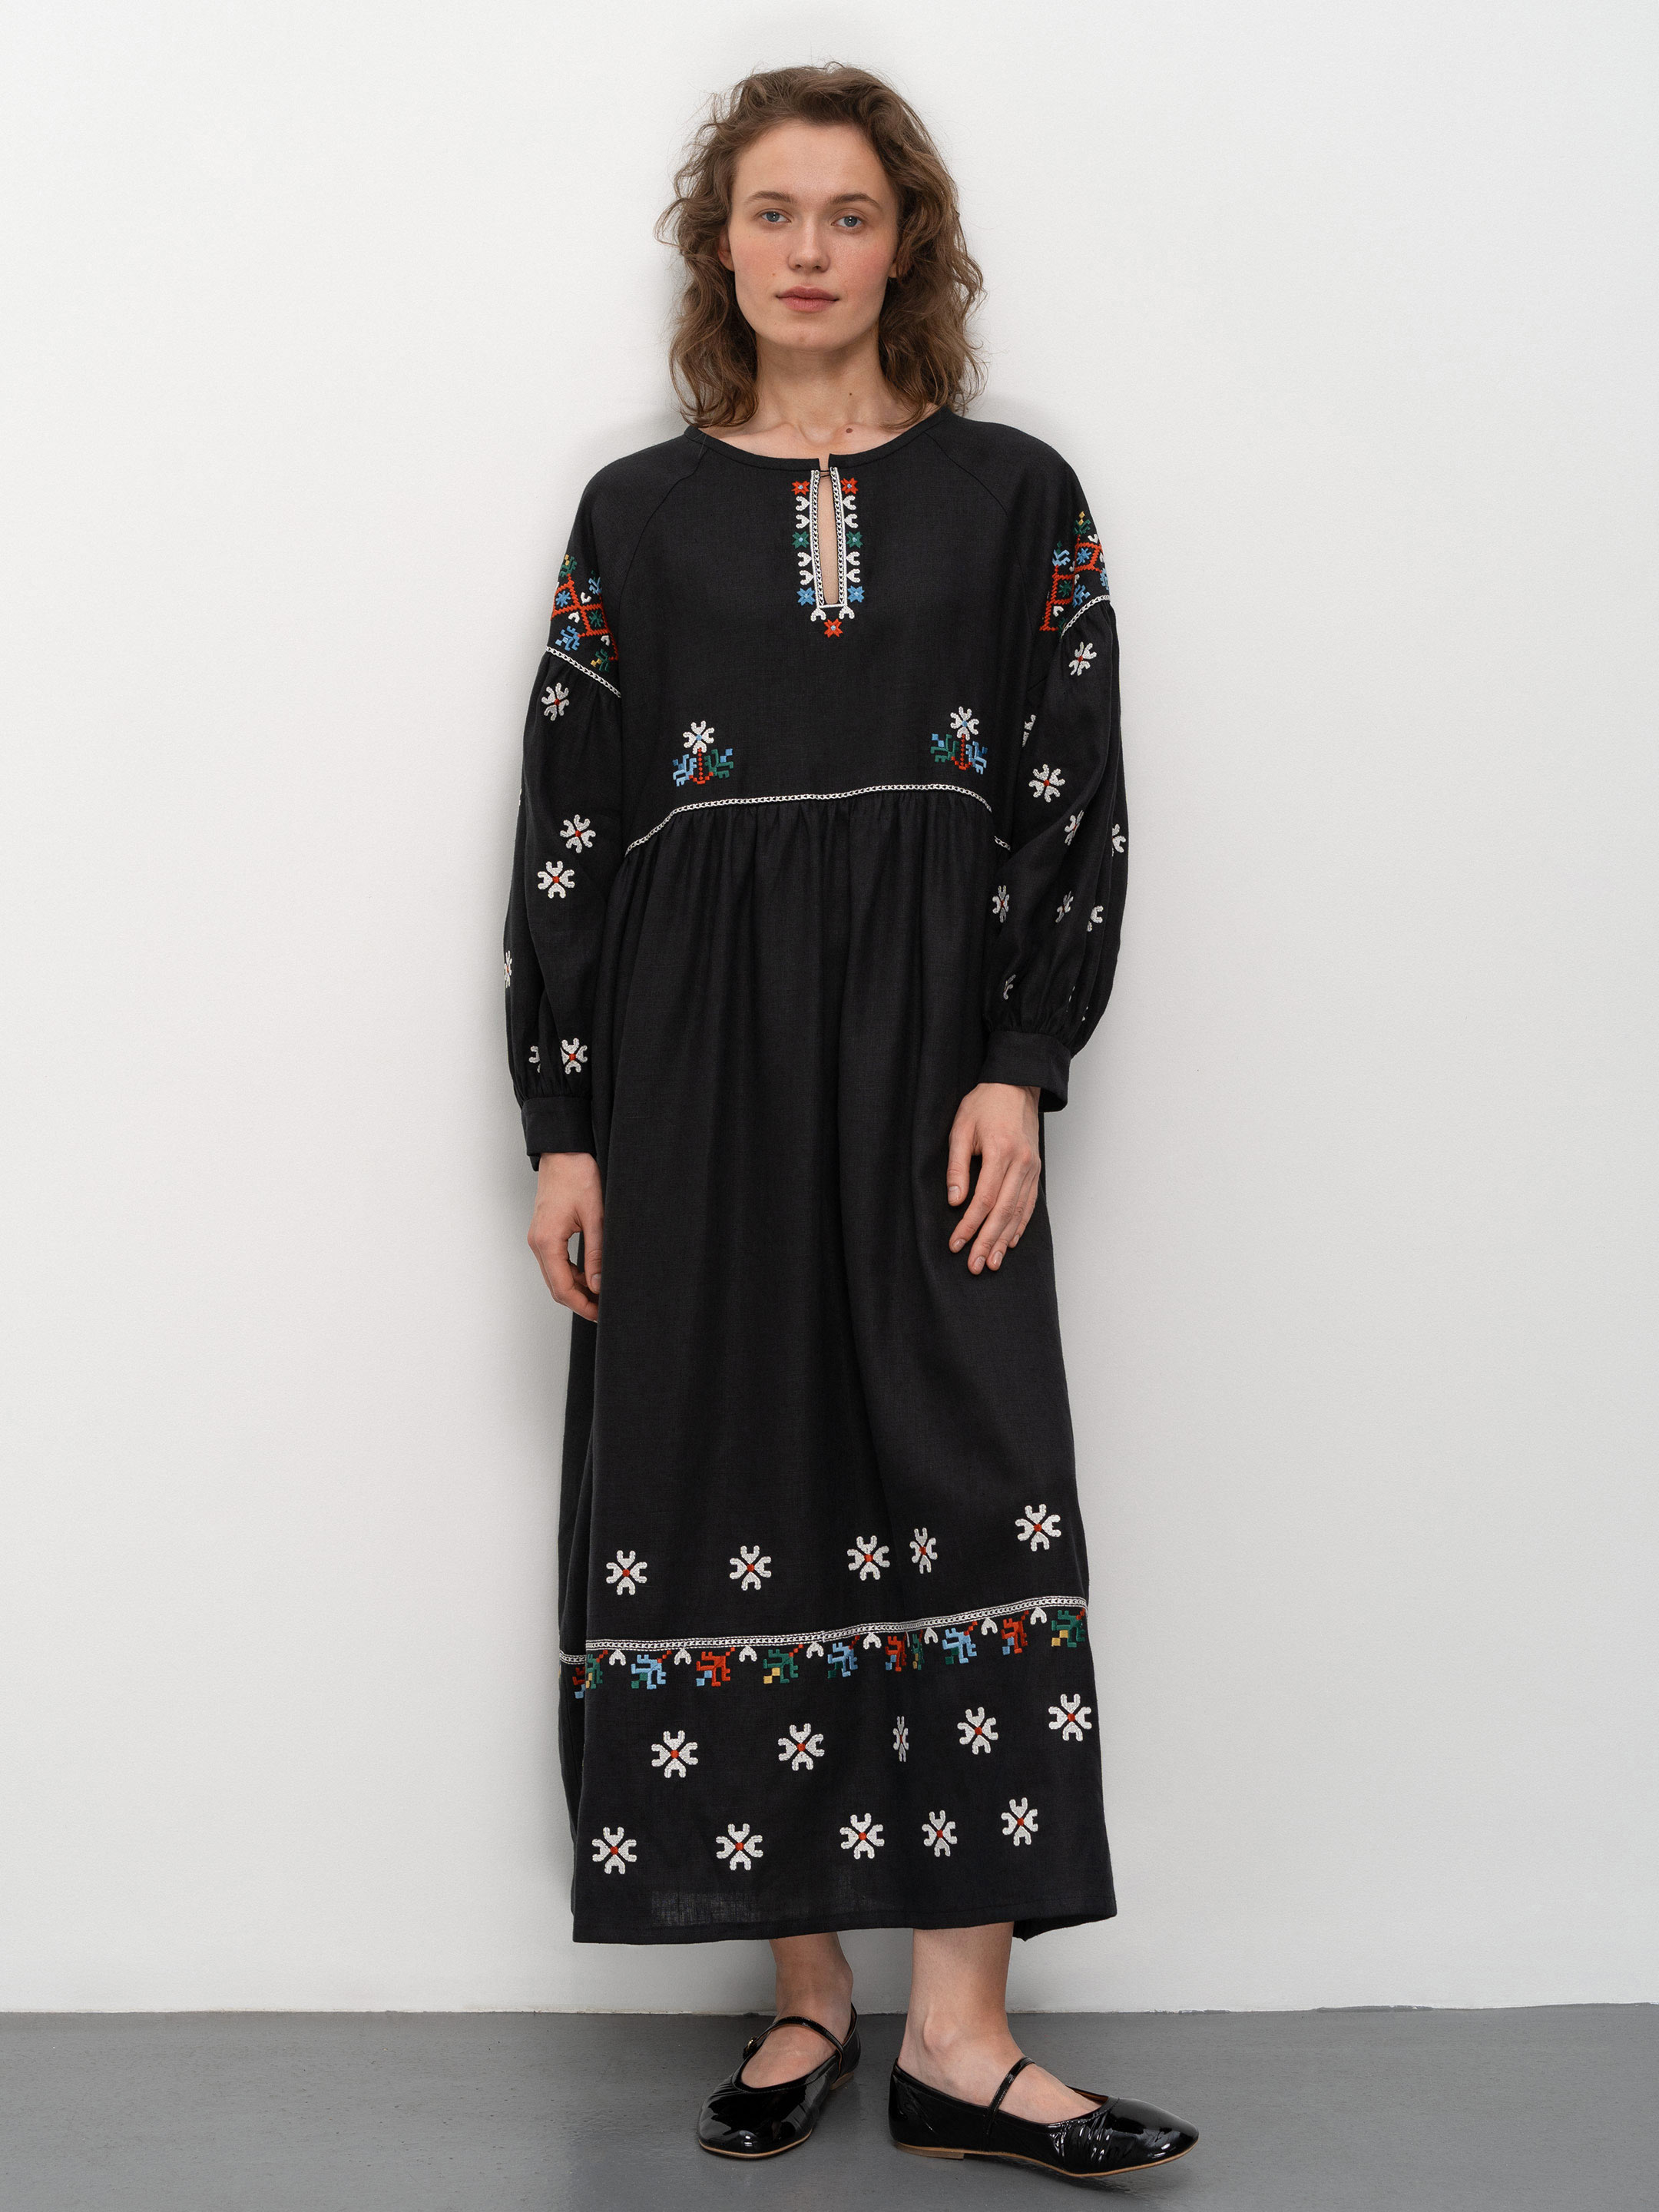 Long embroidered dress of the Podillia region Vinnytska - photo 1